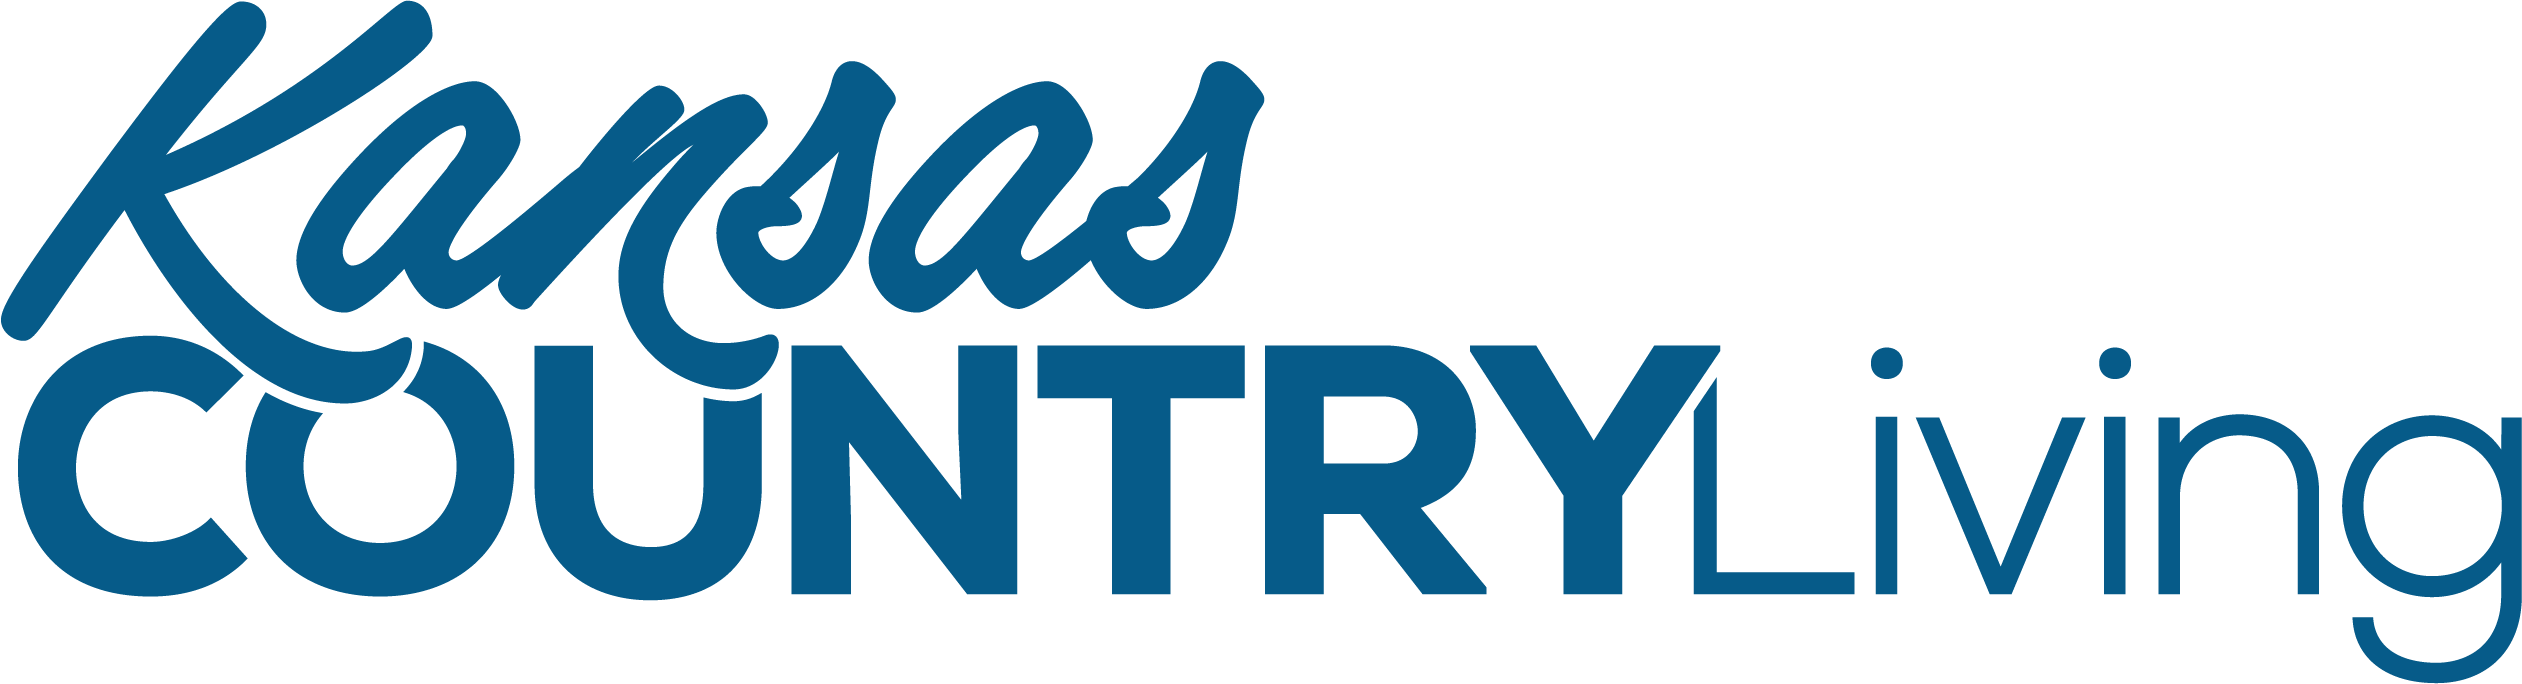 Kansas Country Living Logo